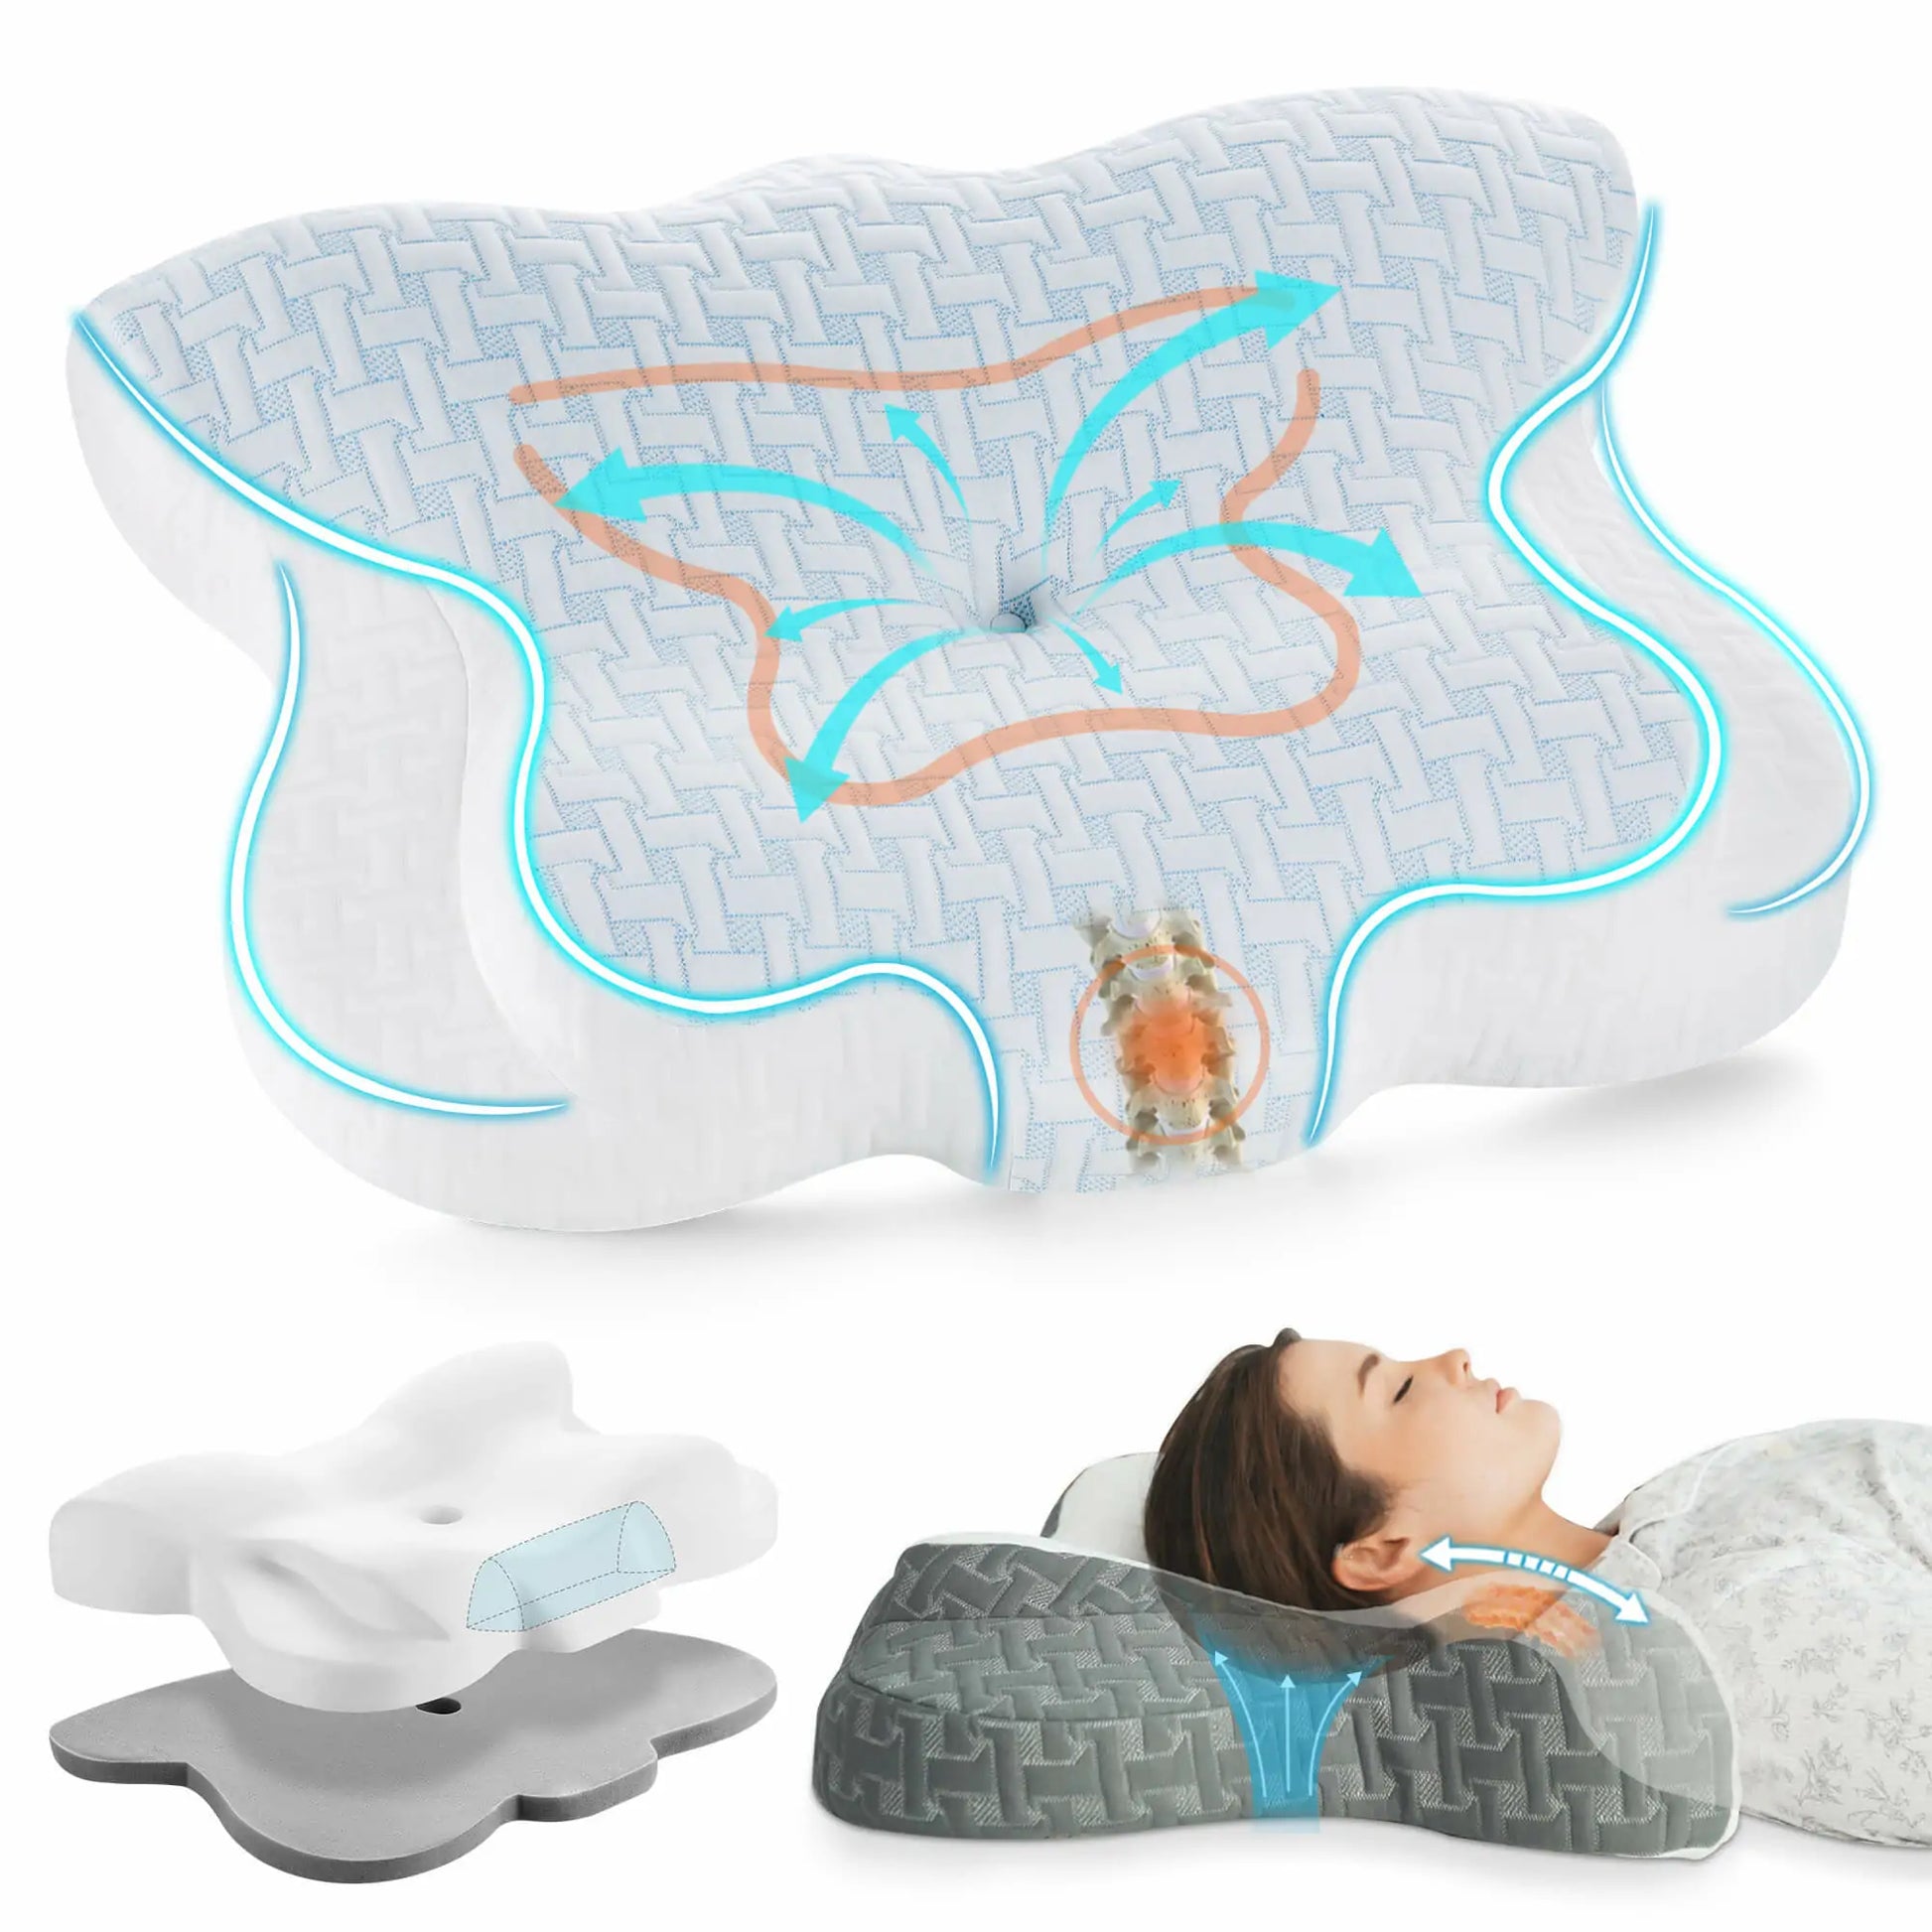 Elviros Cervical Memory Foam Neck Pillow for Pain Relief